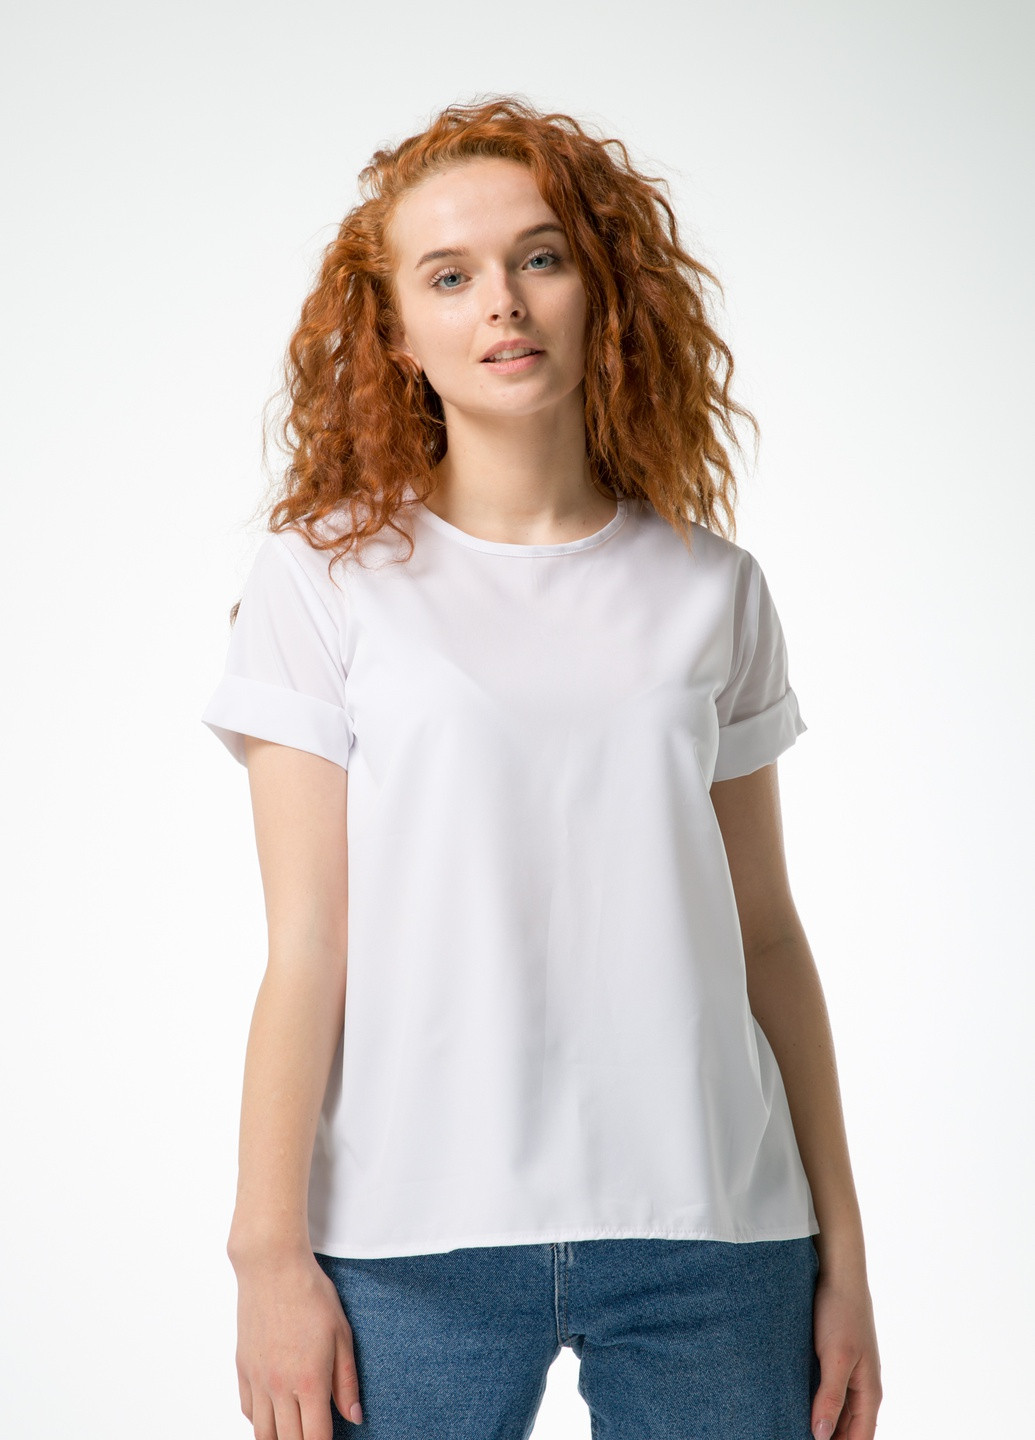 Белая демисезонная базовая блуза - футболка с коротким рукавом INNOE Блуза